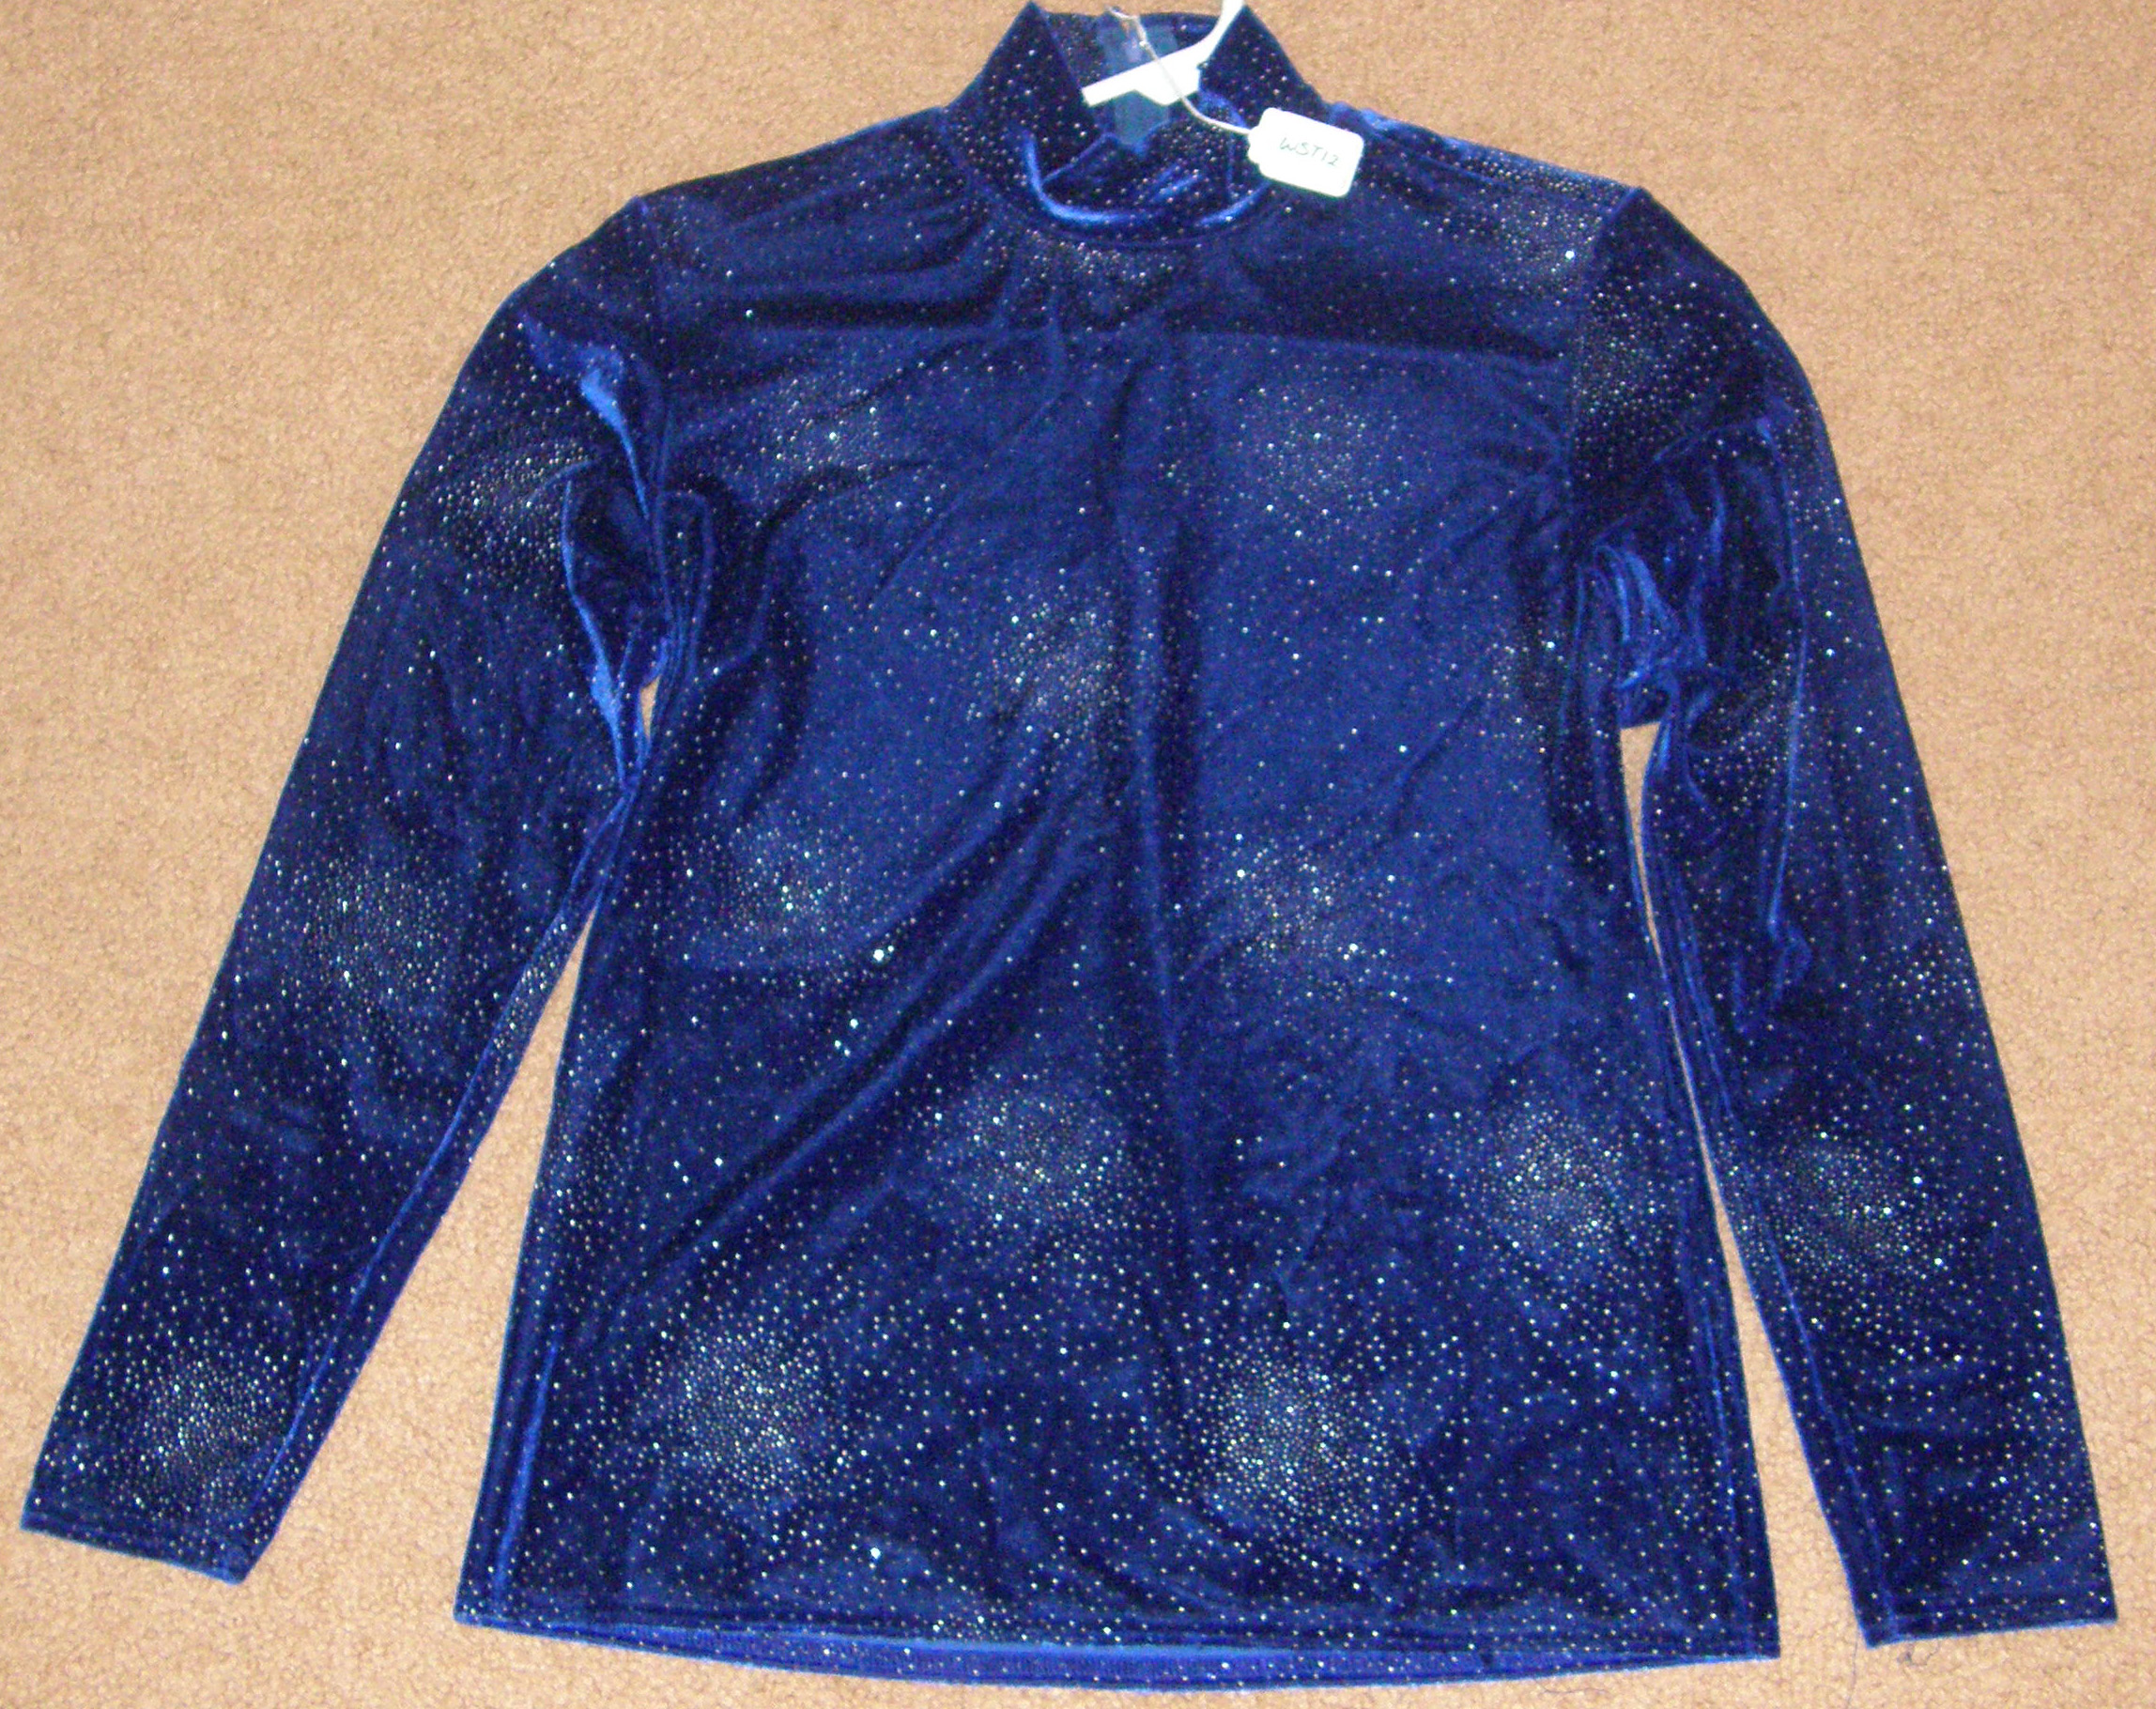 Hobby Horse Galaxy Western Show Shirt Velvet Slinky Top Royal Blue with Glitter Ladies M